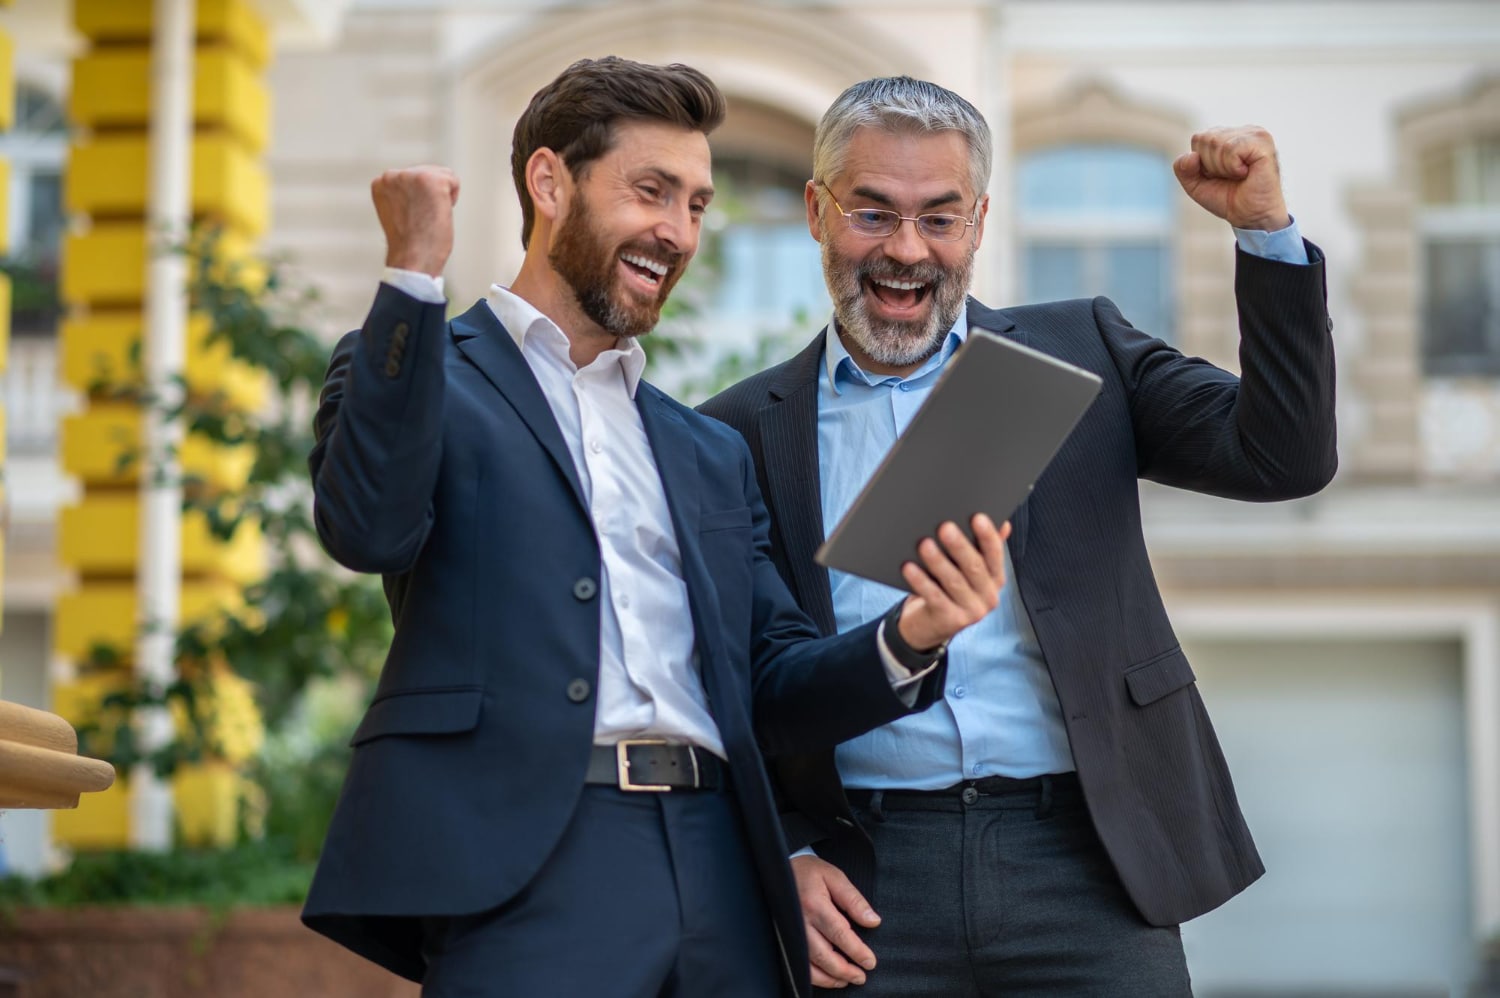 Two Businessmen Celebrating Success With Digital Tablet